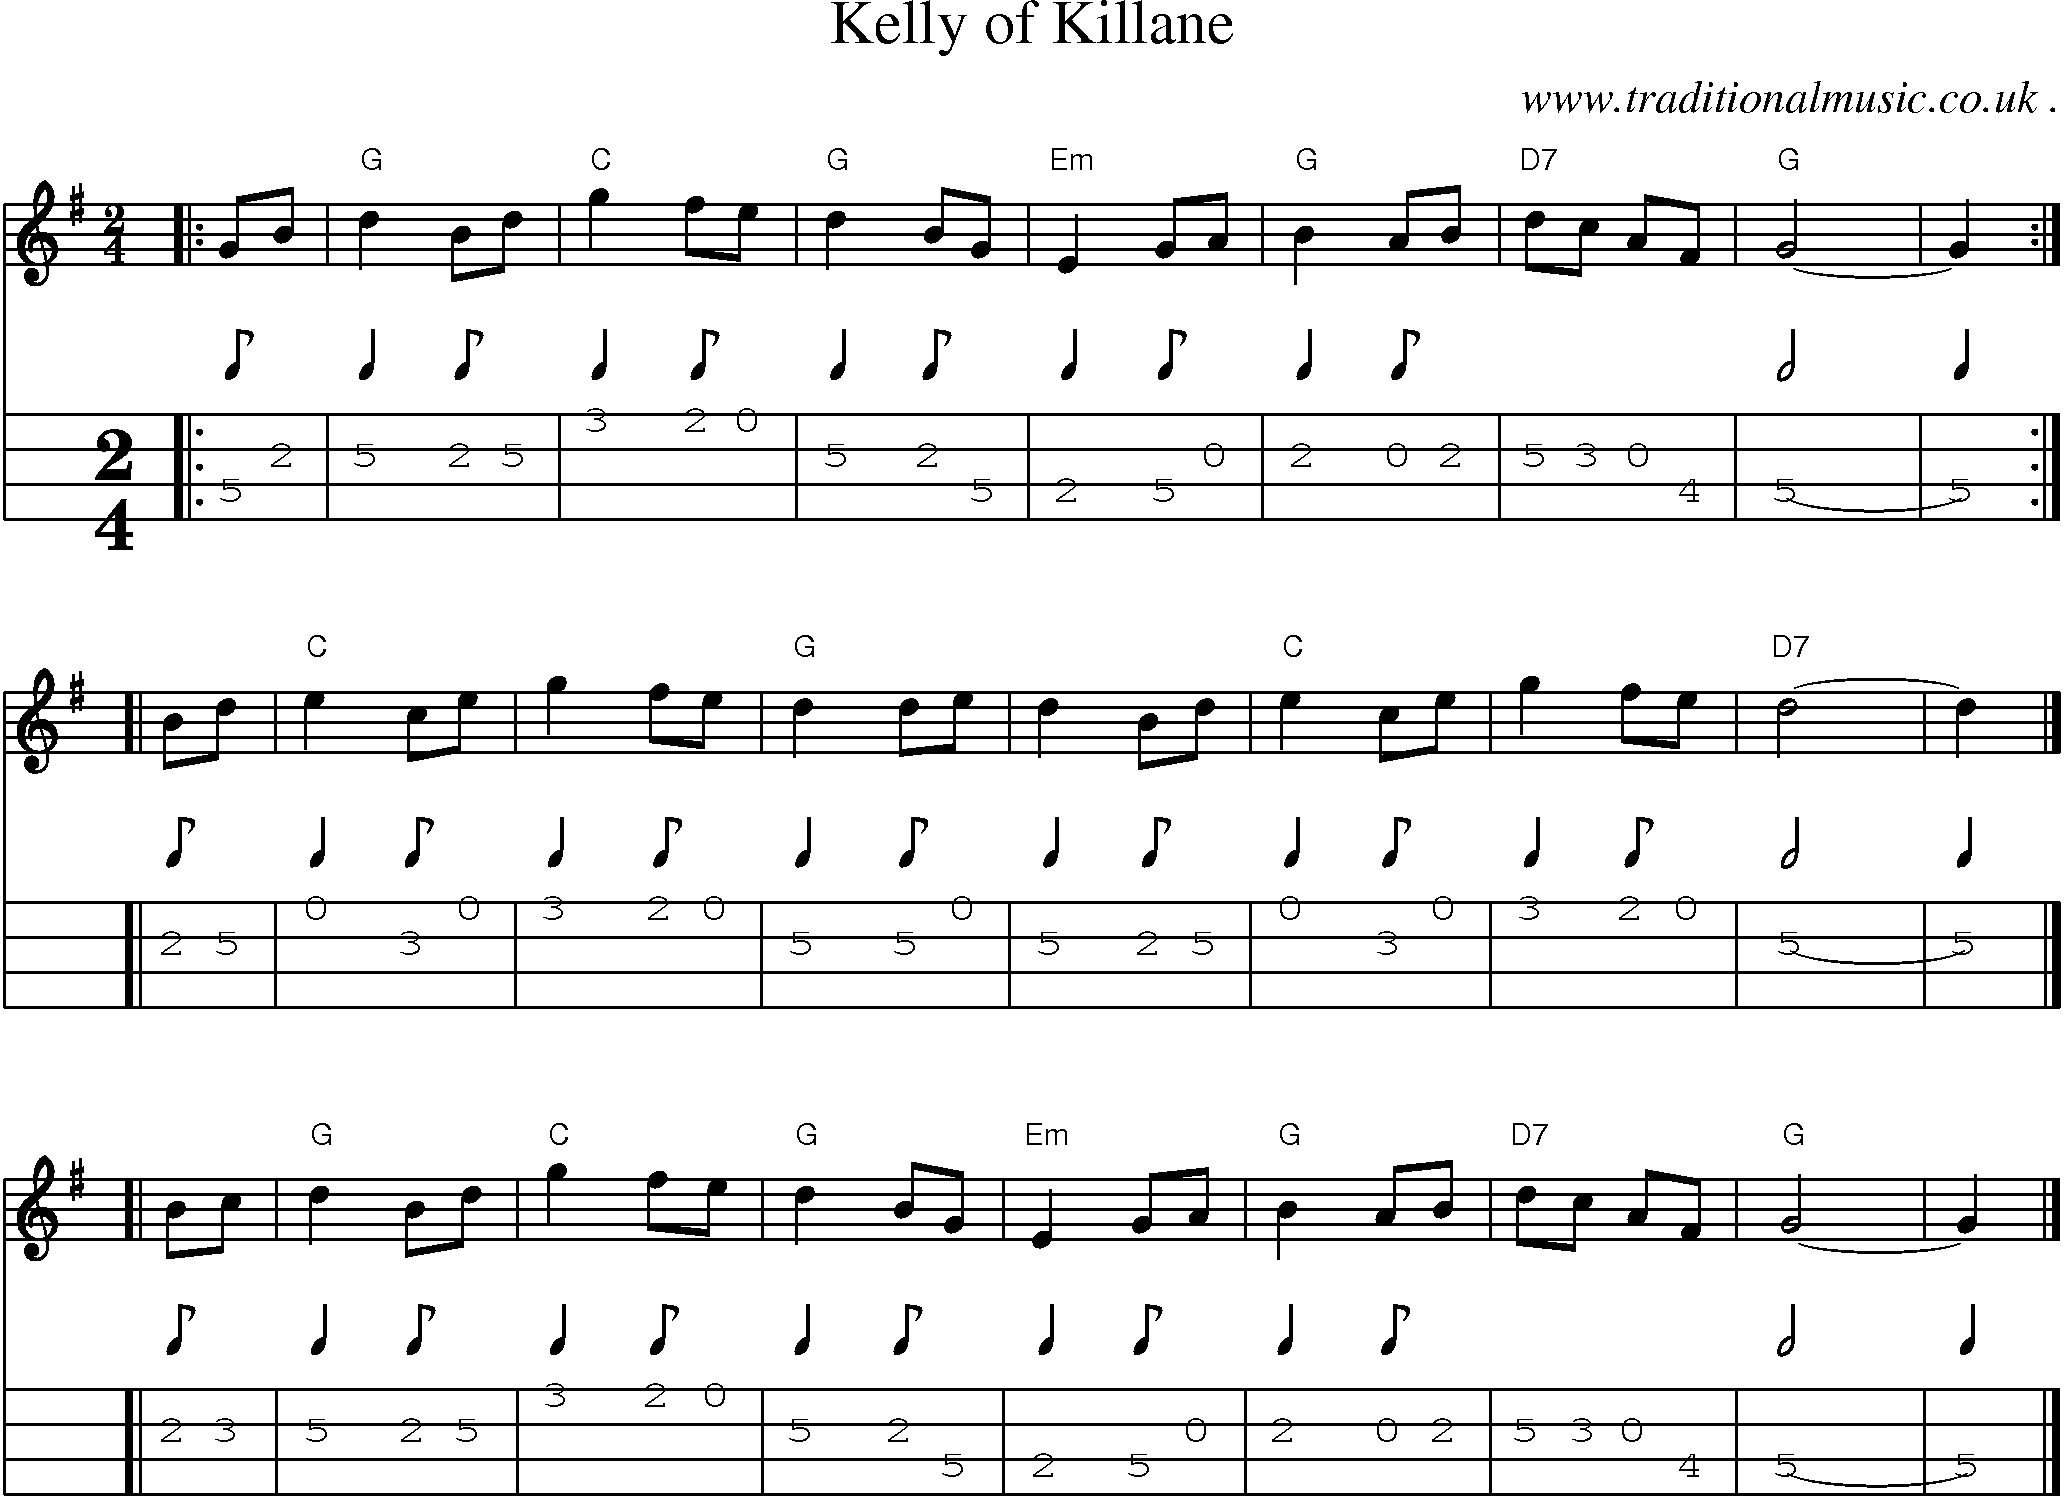 Sheet-music  score, Chords and Mandolin Tabs for Kelly Of Killane